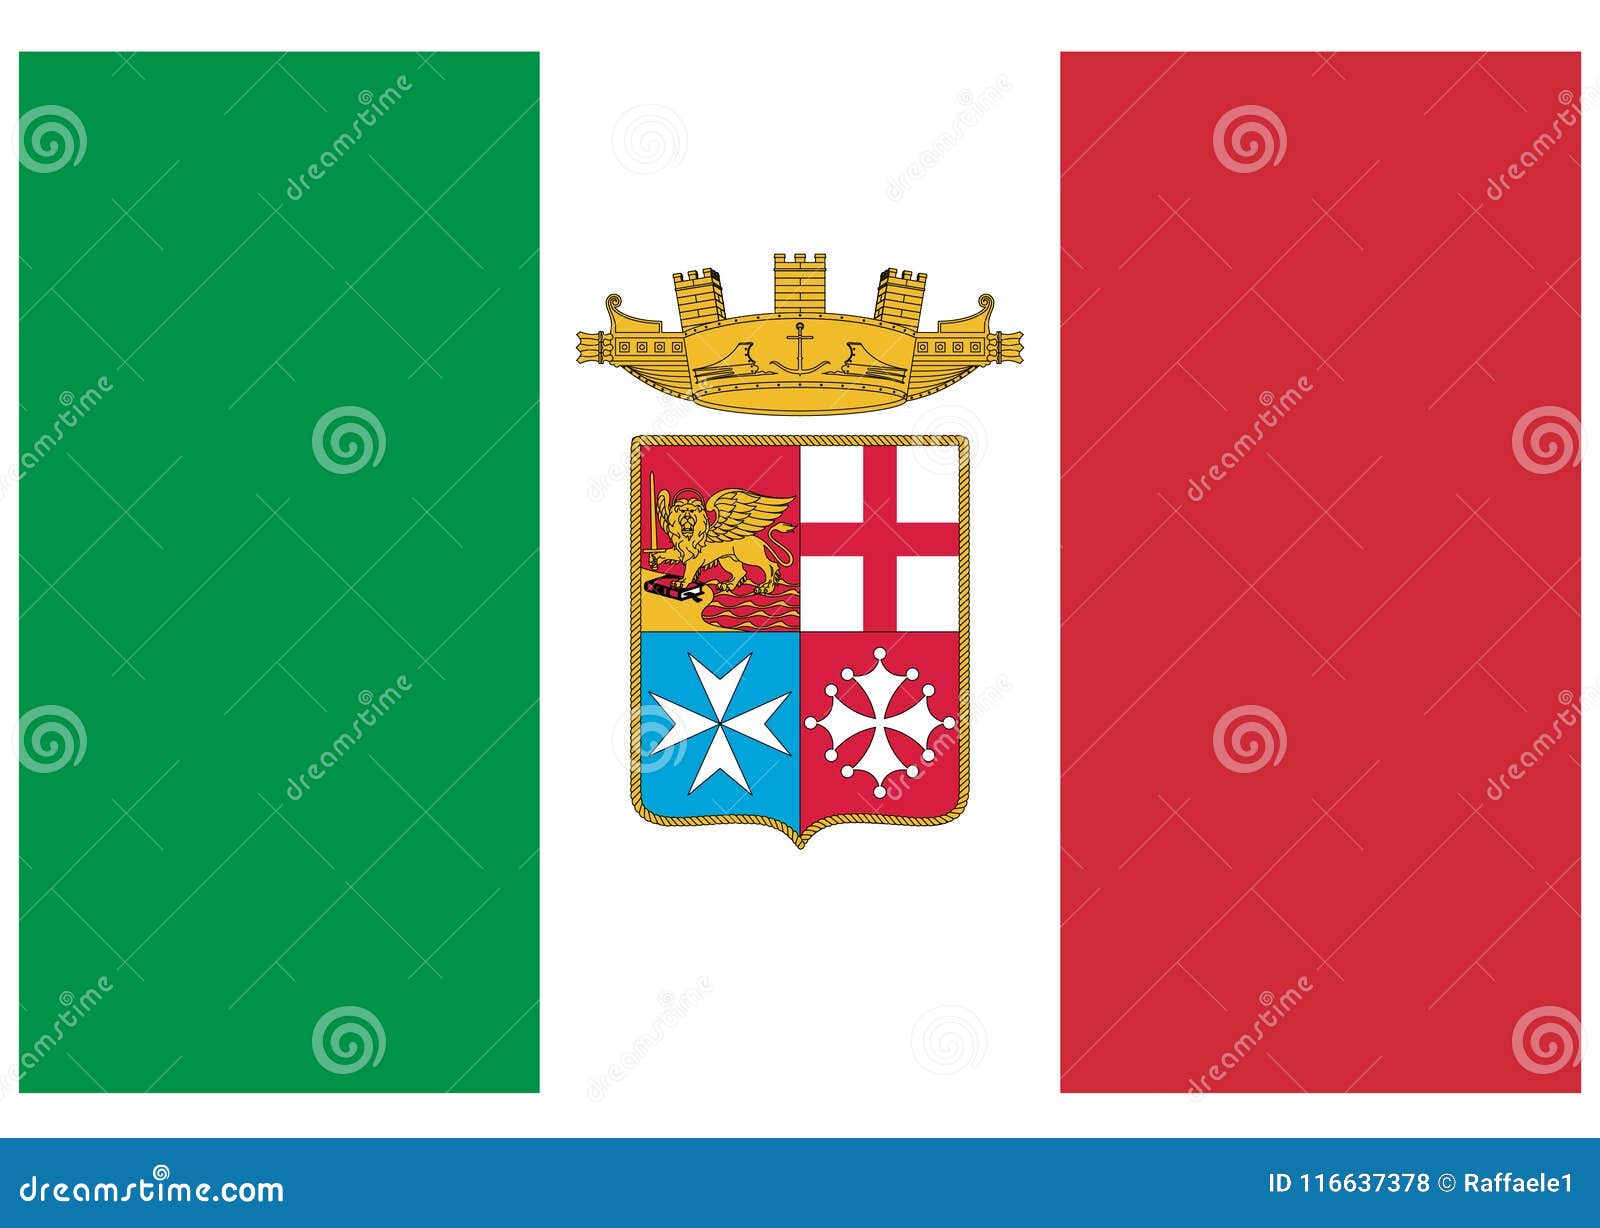 DMSE Italy Italian National Green White Red Flag 2X3 Ft Foot 100% Polyester 100D Flag UV Resistant 2' X 3' Ft Foot 